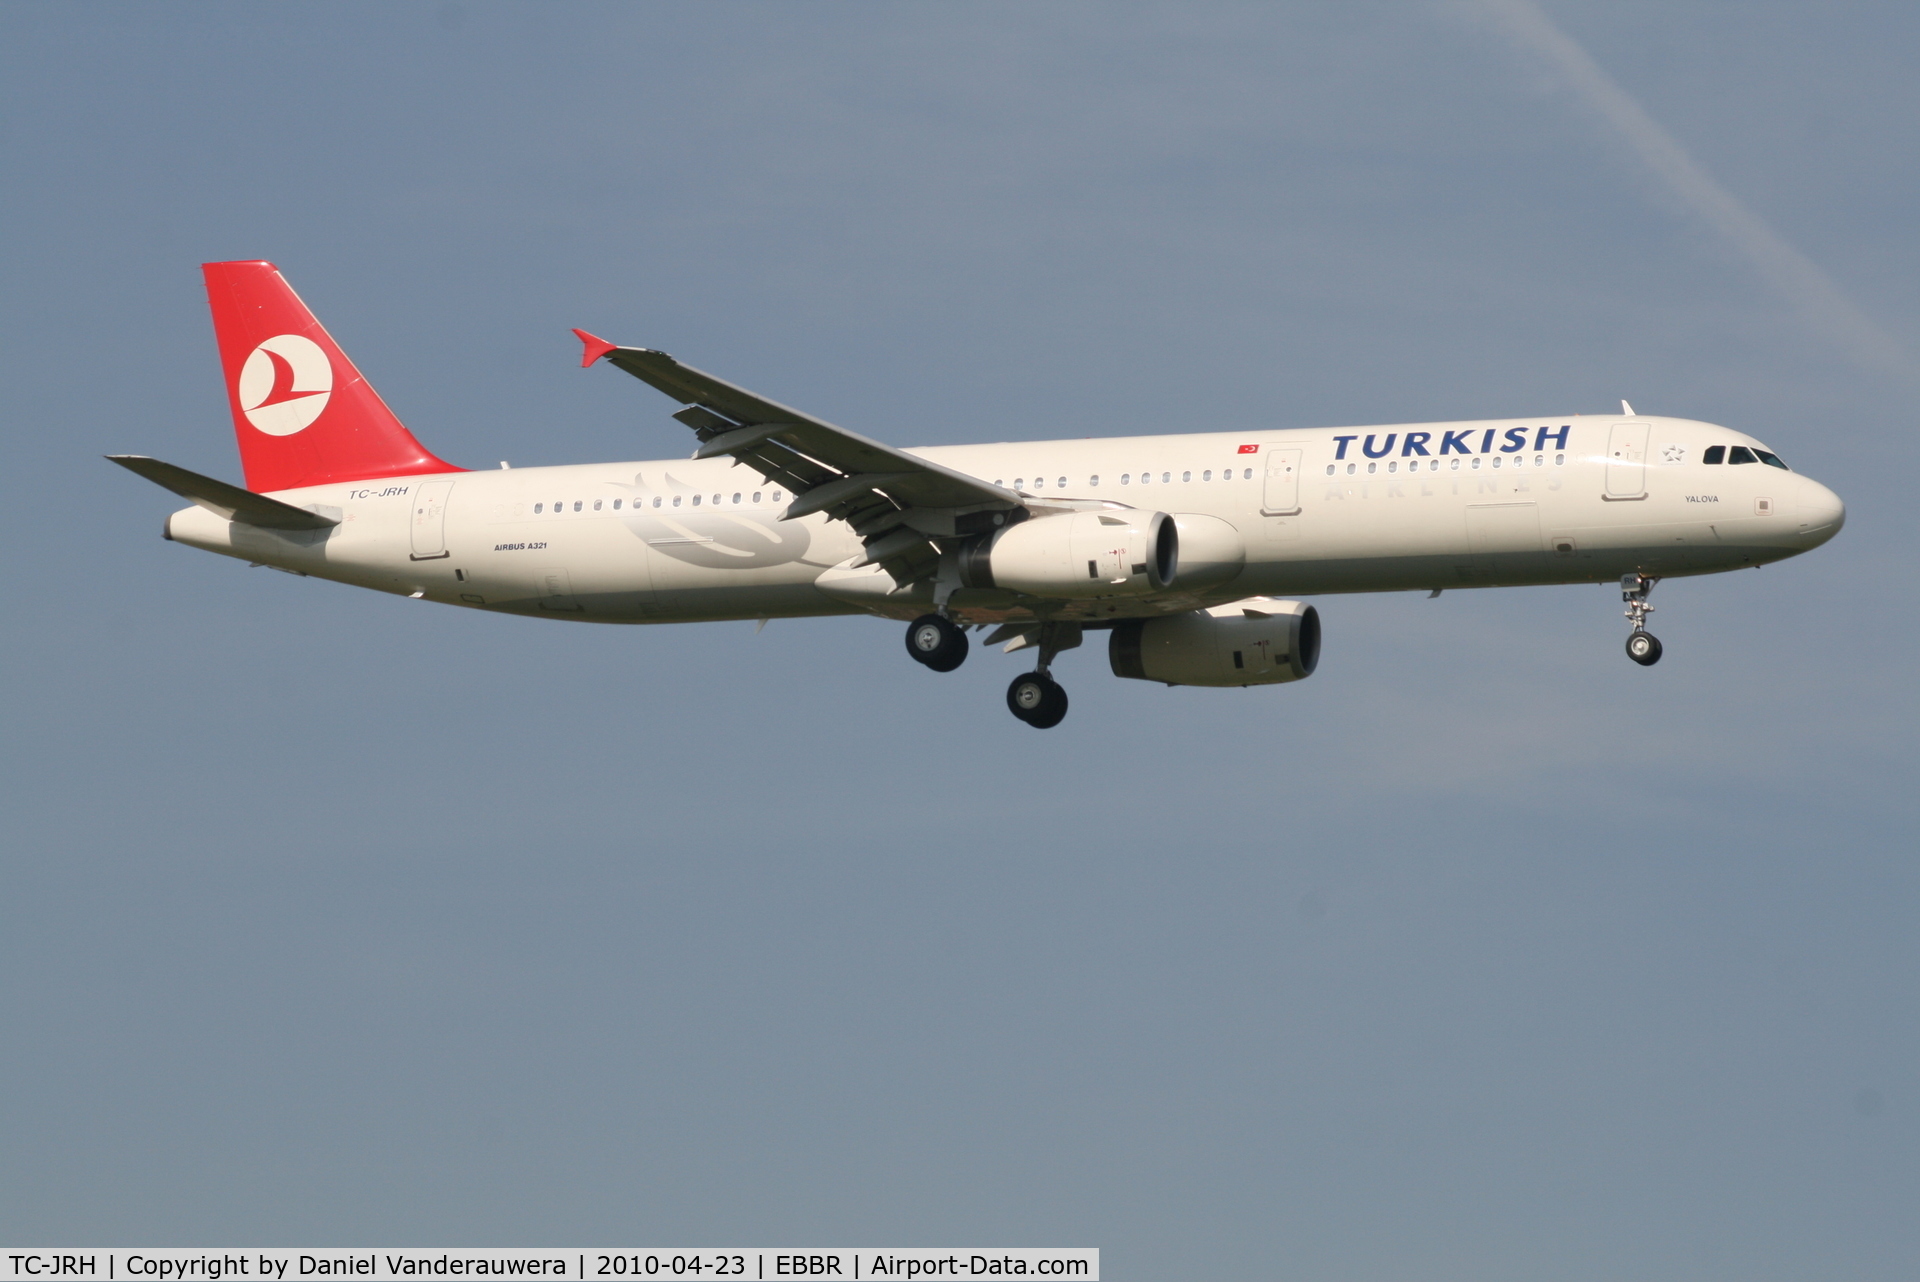 TC-JRH, 2008 Airbus A321-231 C/N 3350, Arrival of flight TK1937 to RWY 02